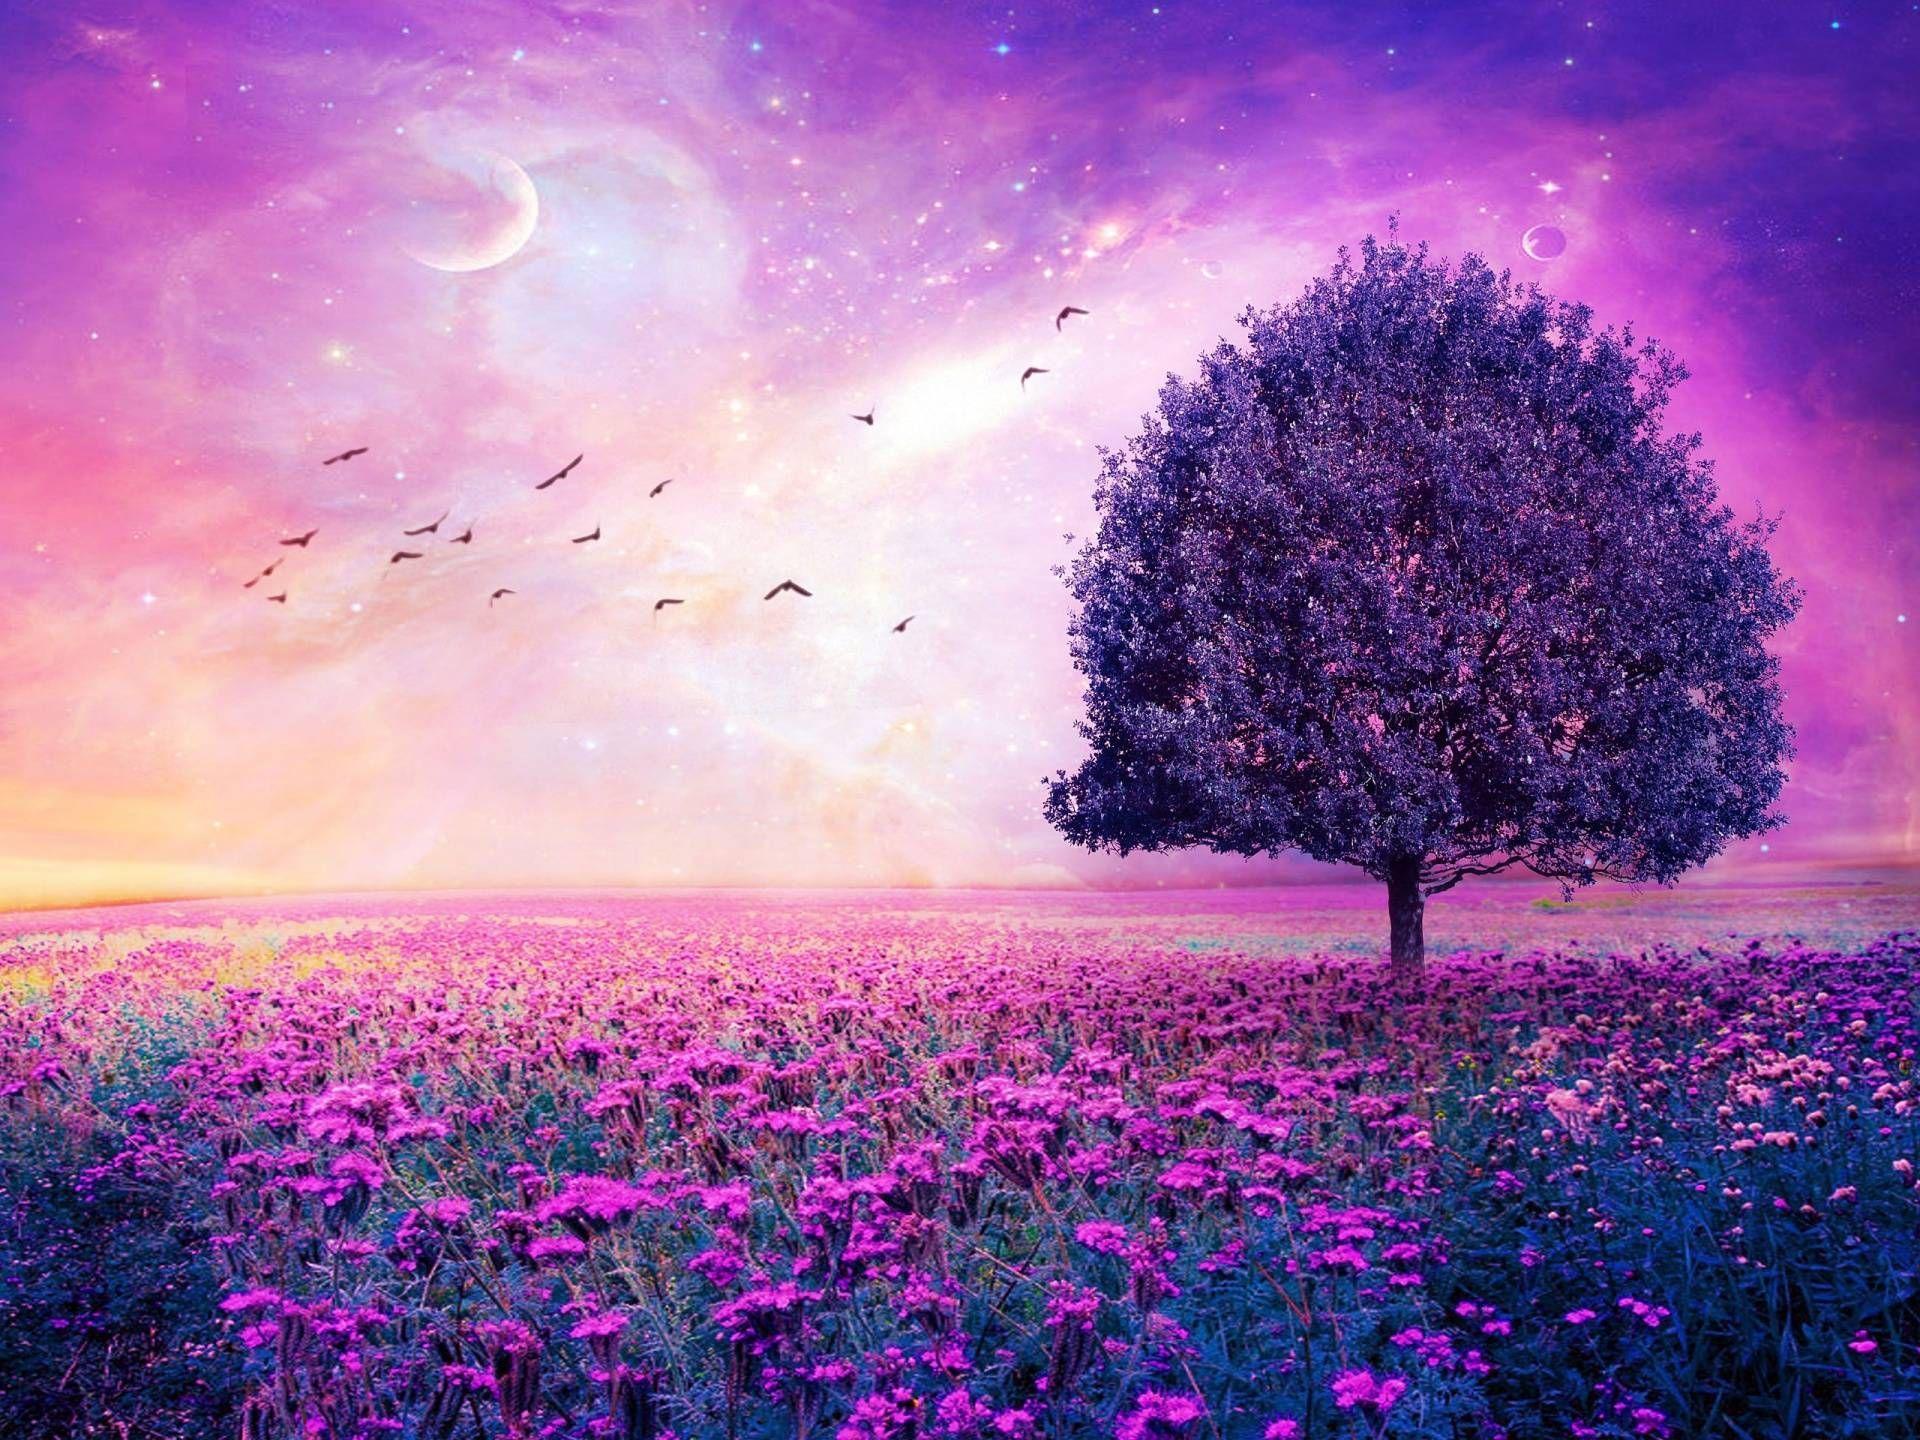 Field of Purple Flowers Wallpaper at